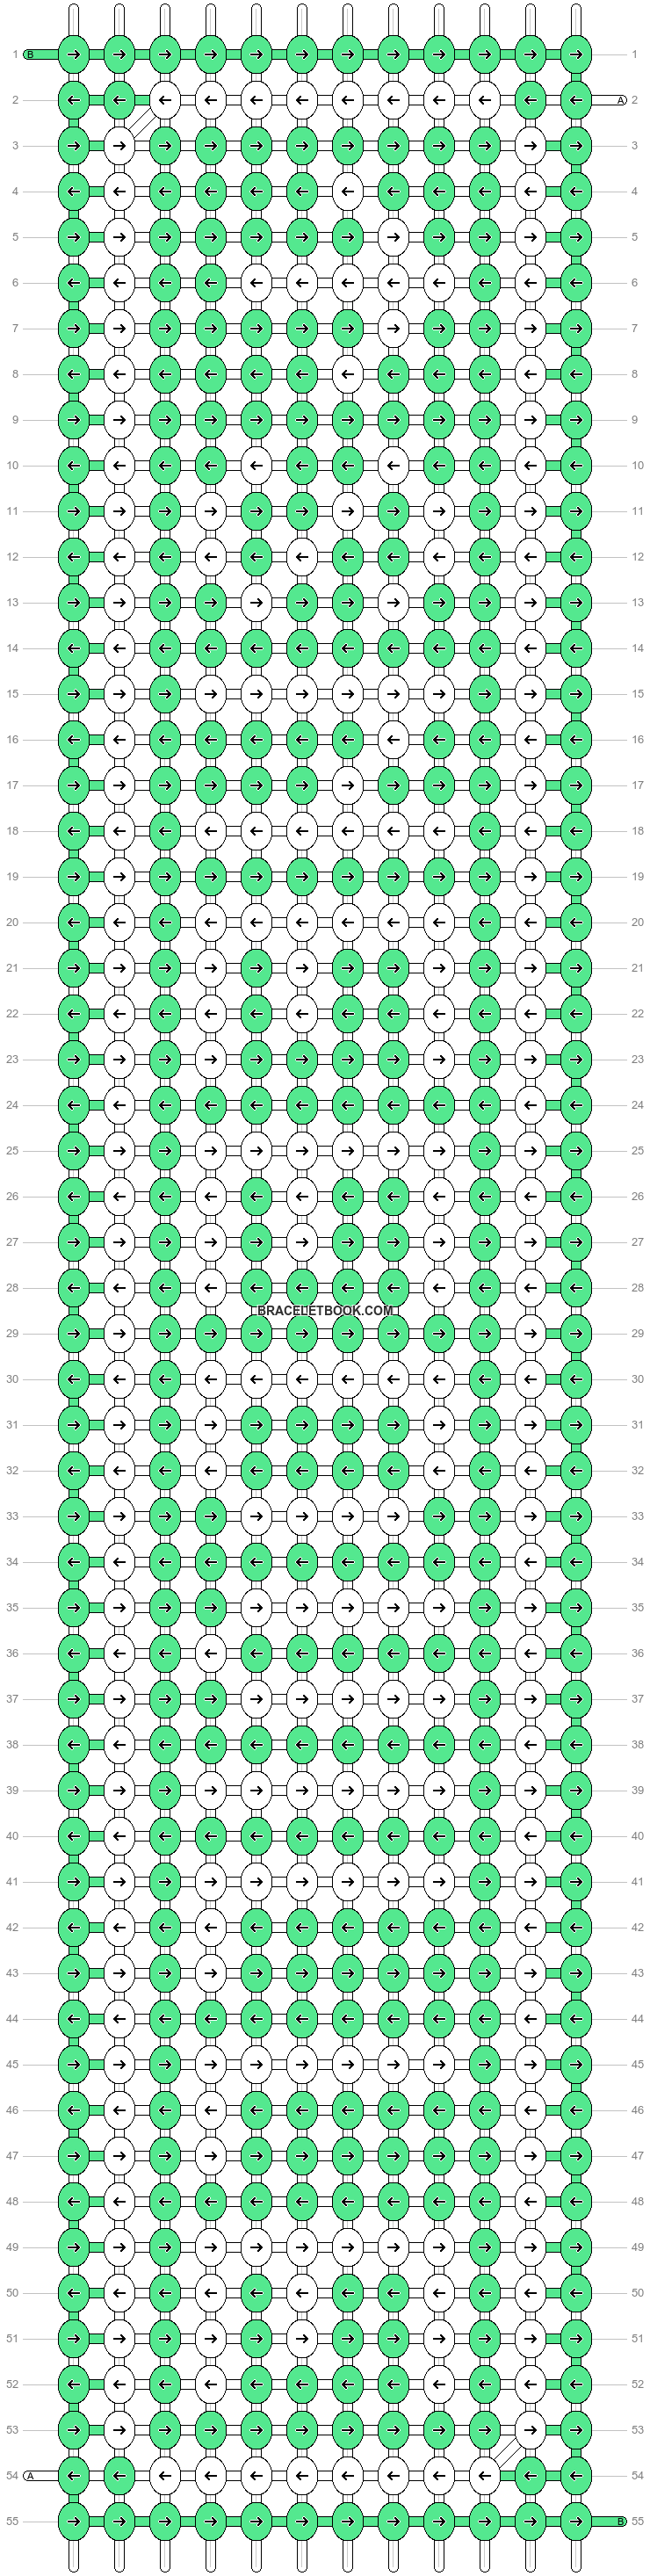 Alpha pattern #46787 pattern